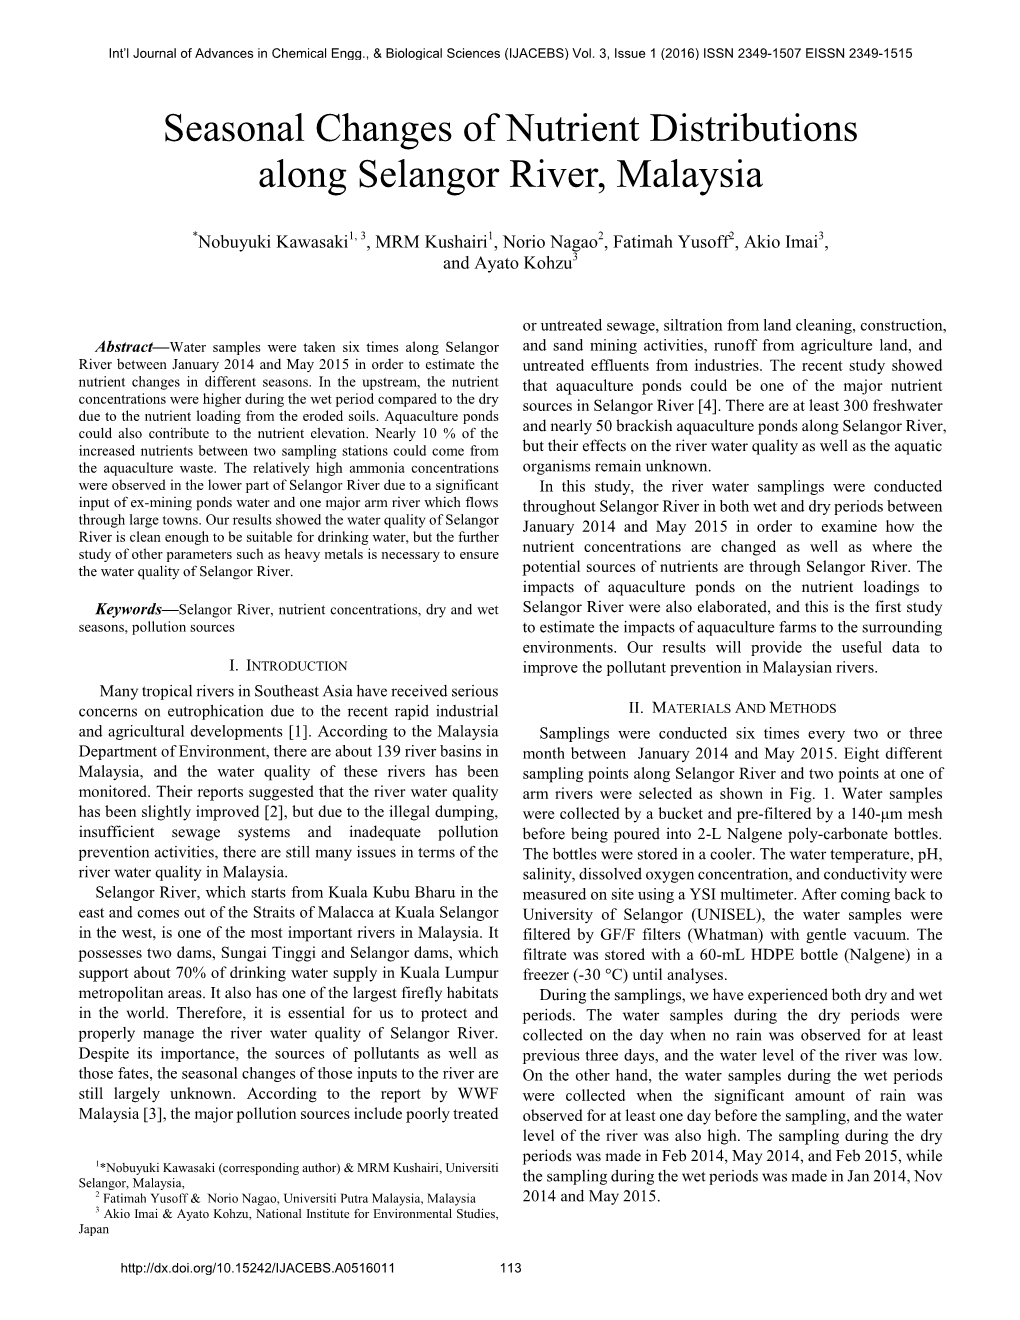 Seasonal Changes of Nutrient Distributions Along Selangor River, Malaysia